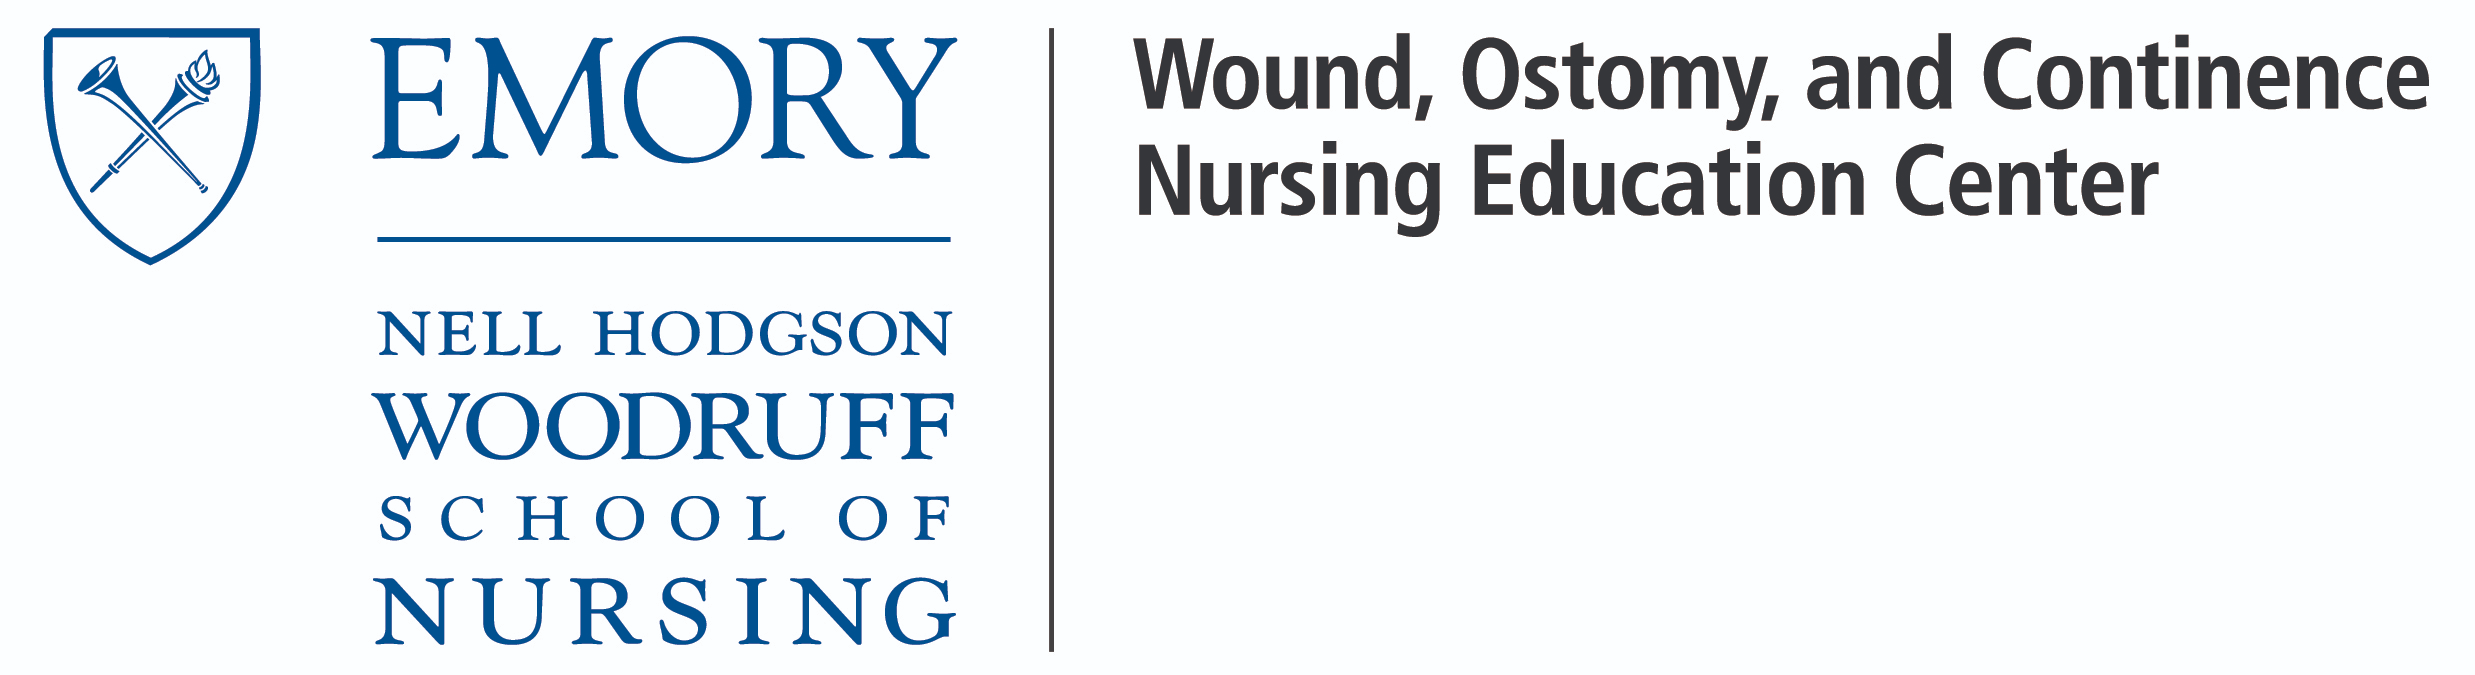 Emory Nursing Wound, Ostomy, and Continence Nursing Education Center